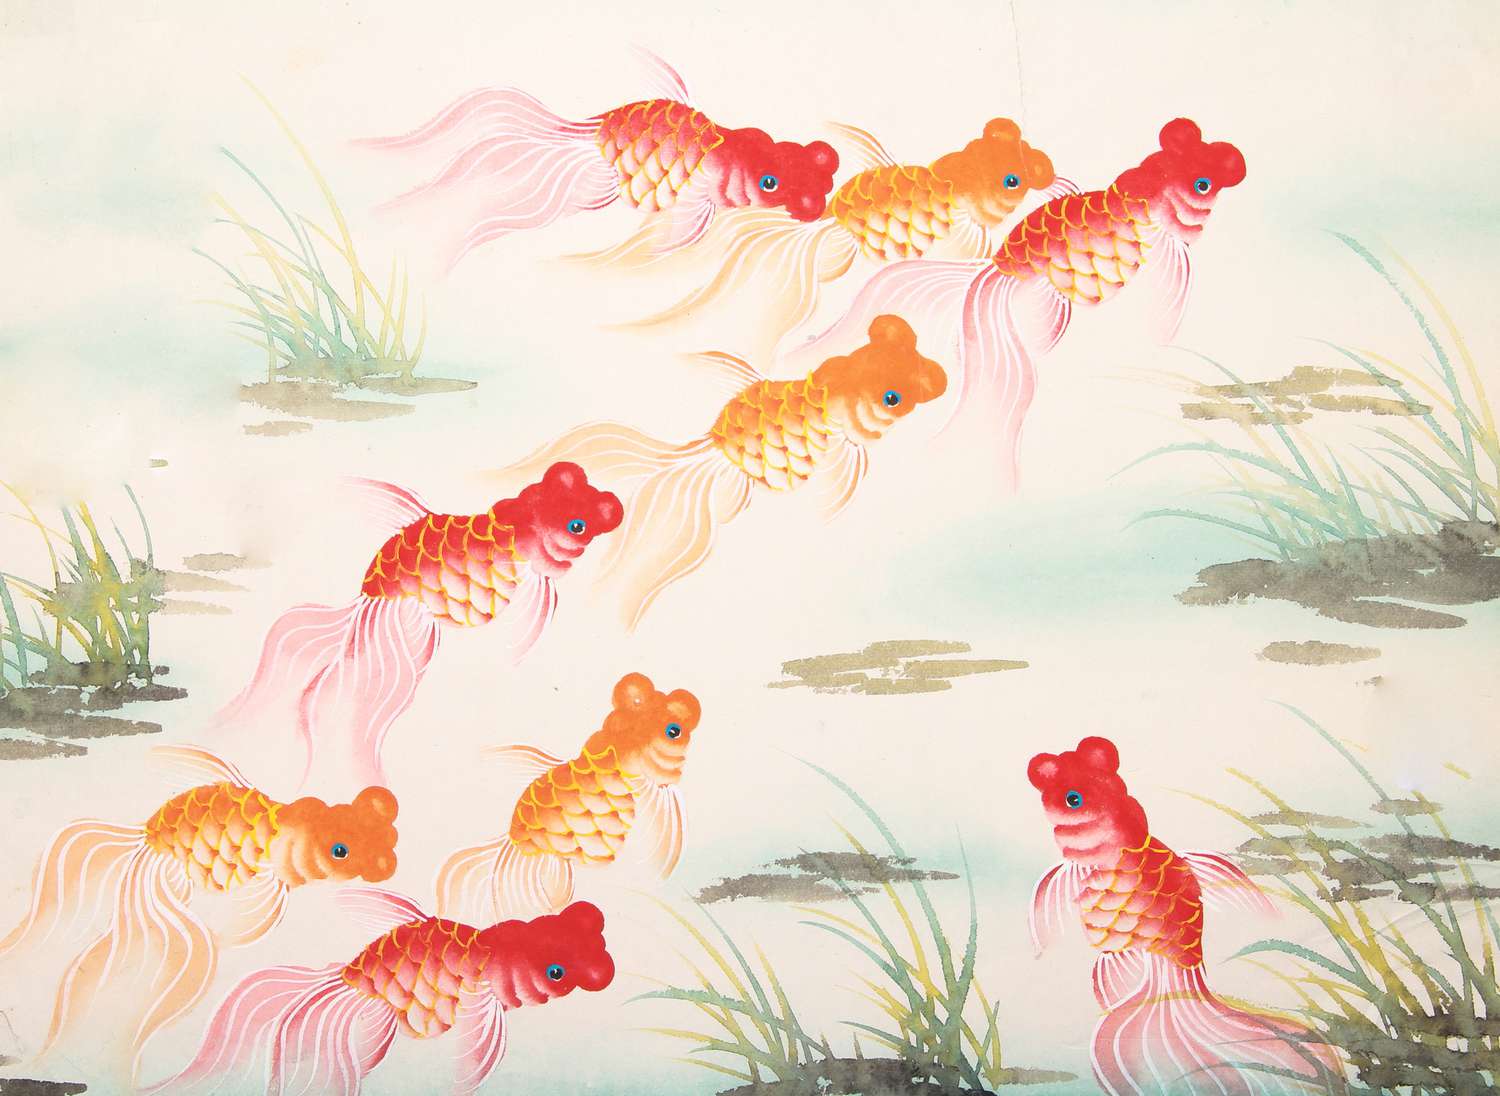 Pintura tradicional china de peces de colores